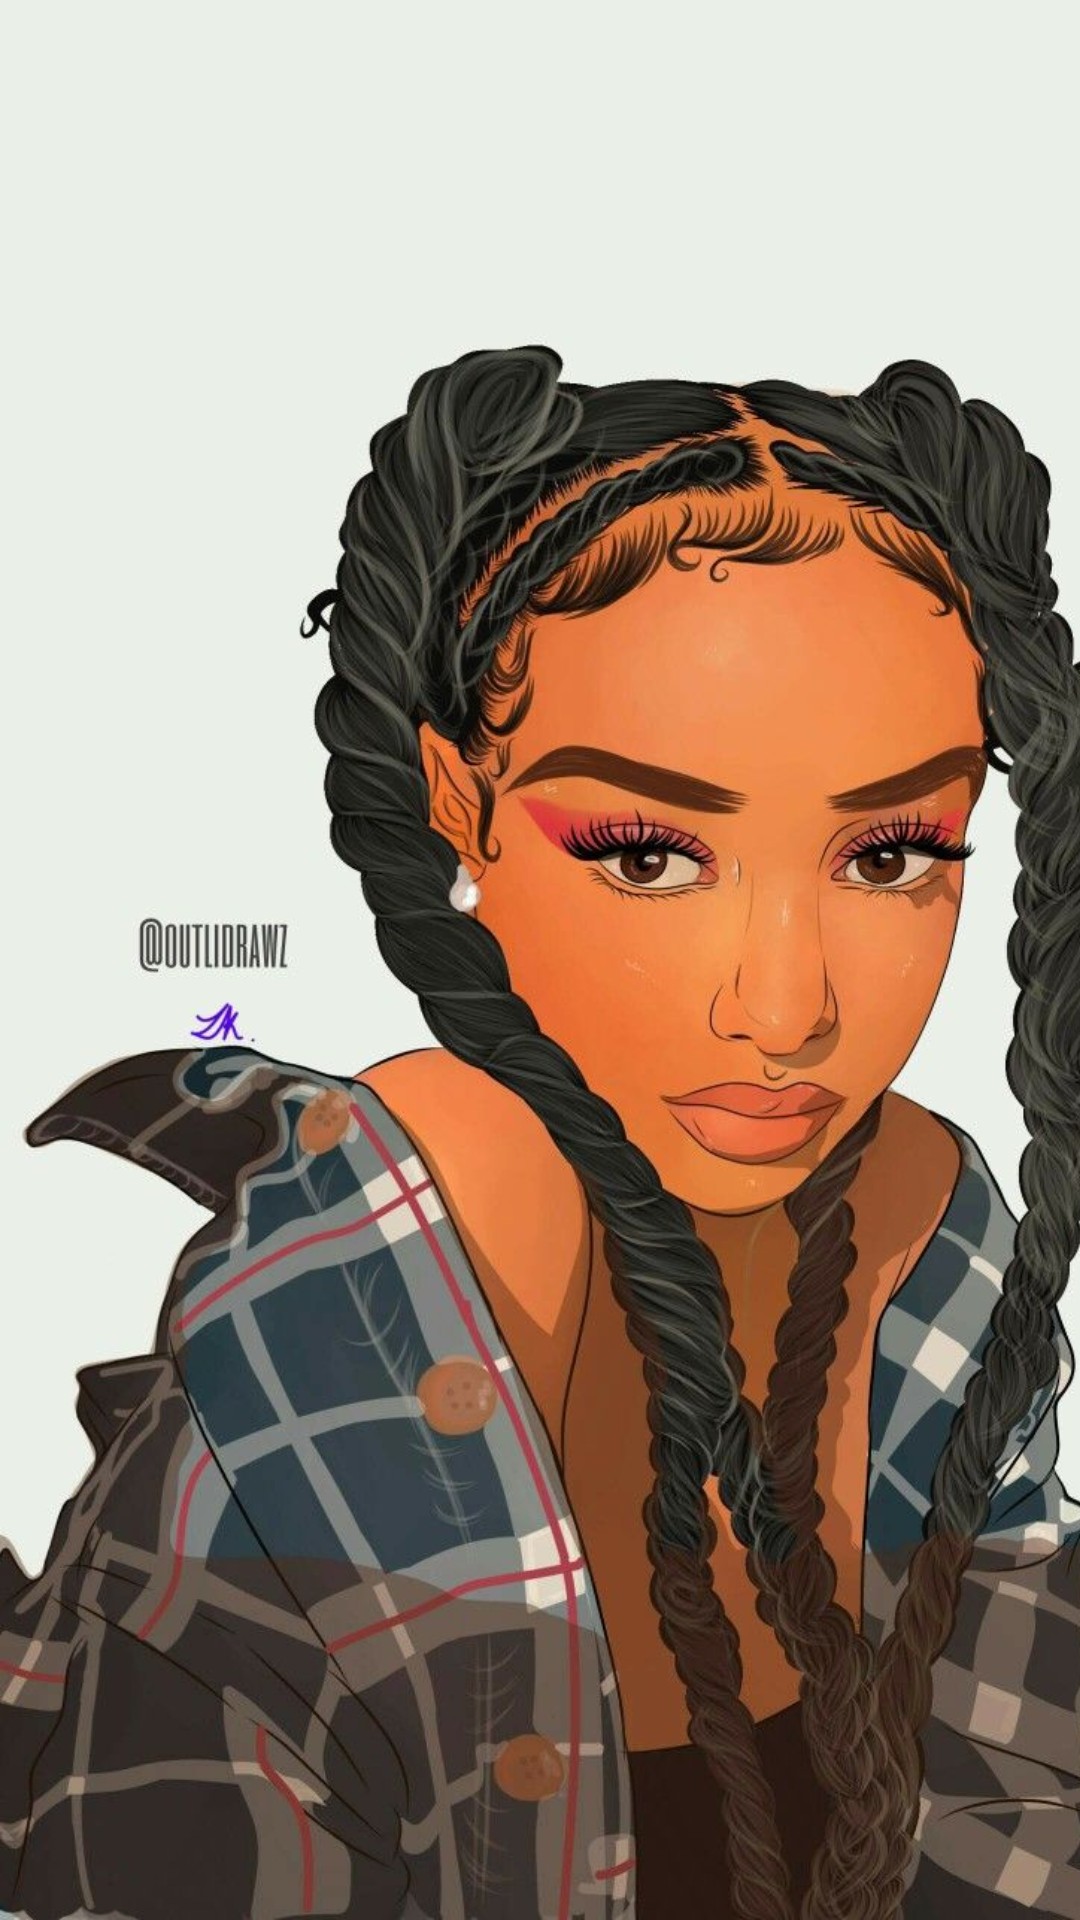 Black Girl Cartoon Wallpapers - Top 20 Best Black Girl Cartoon Wallpapers  Download